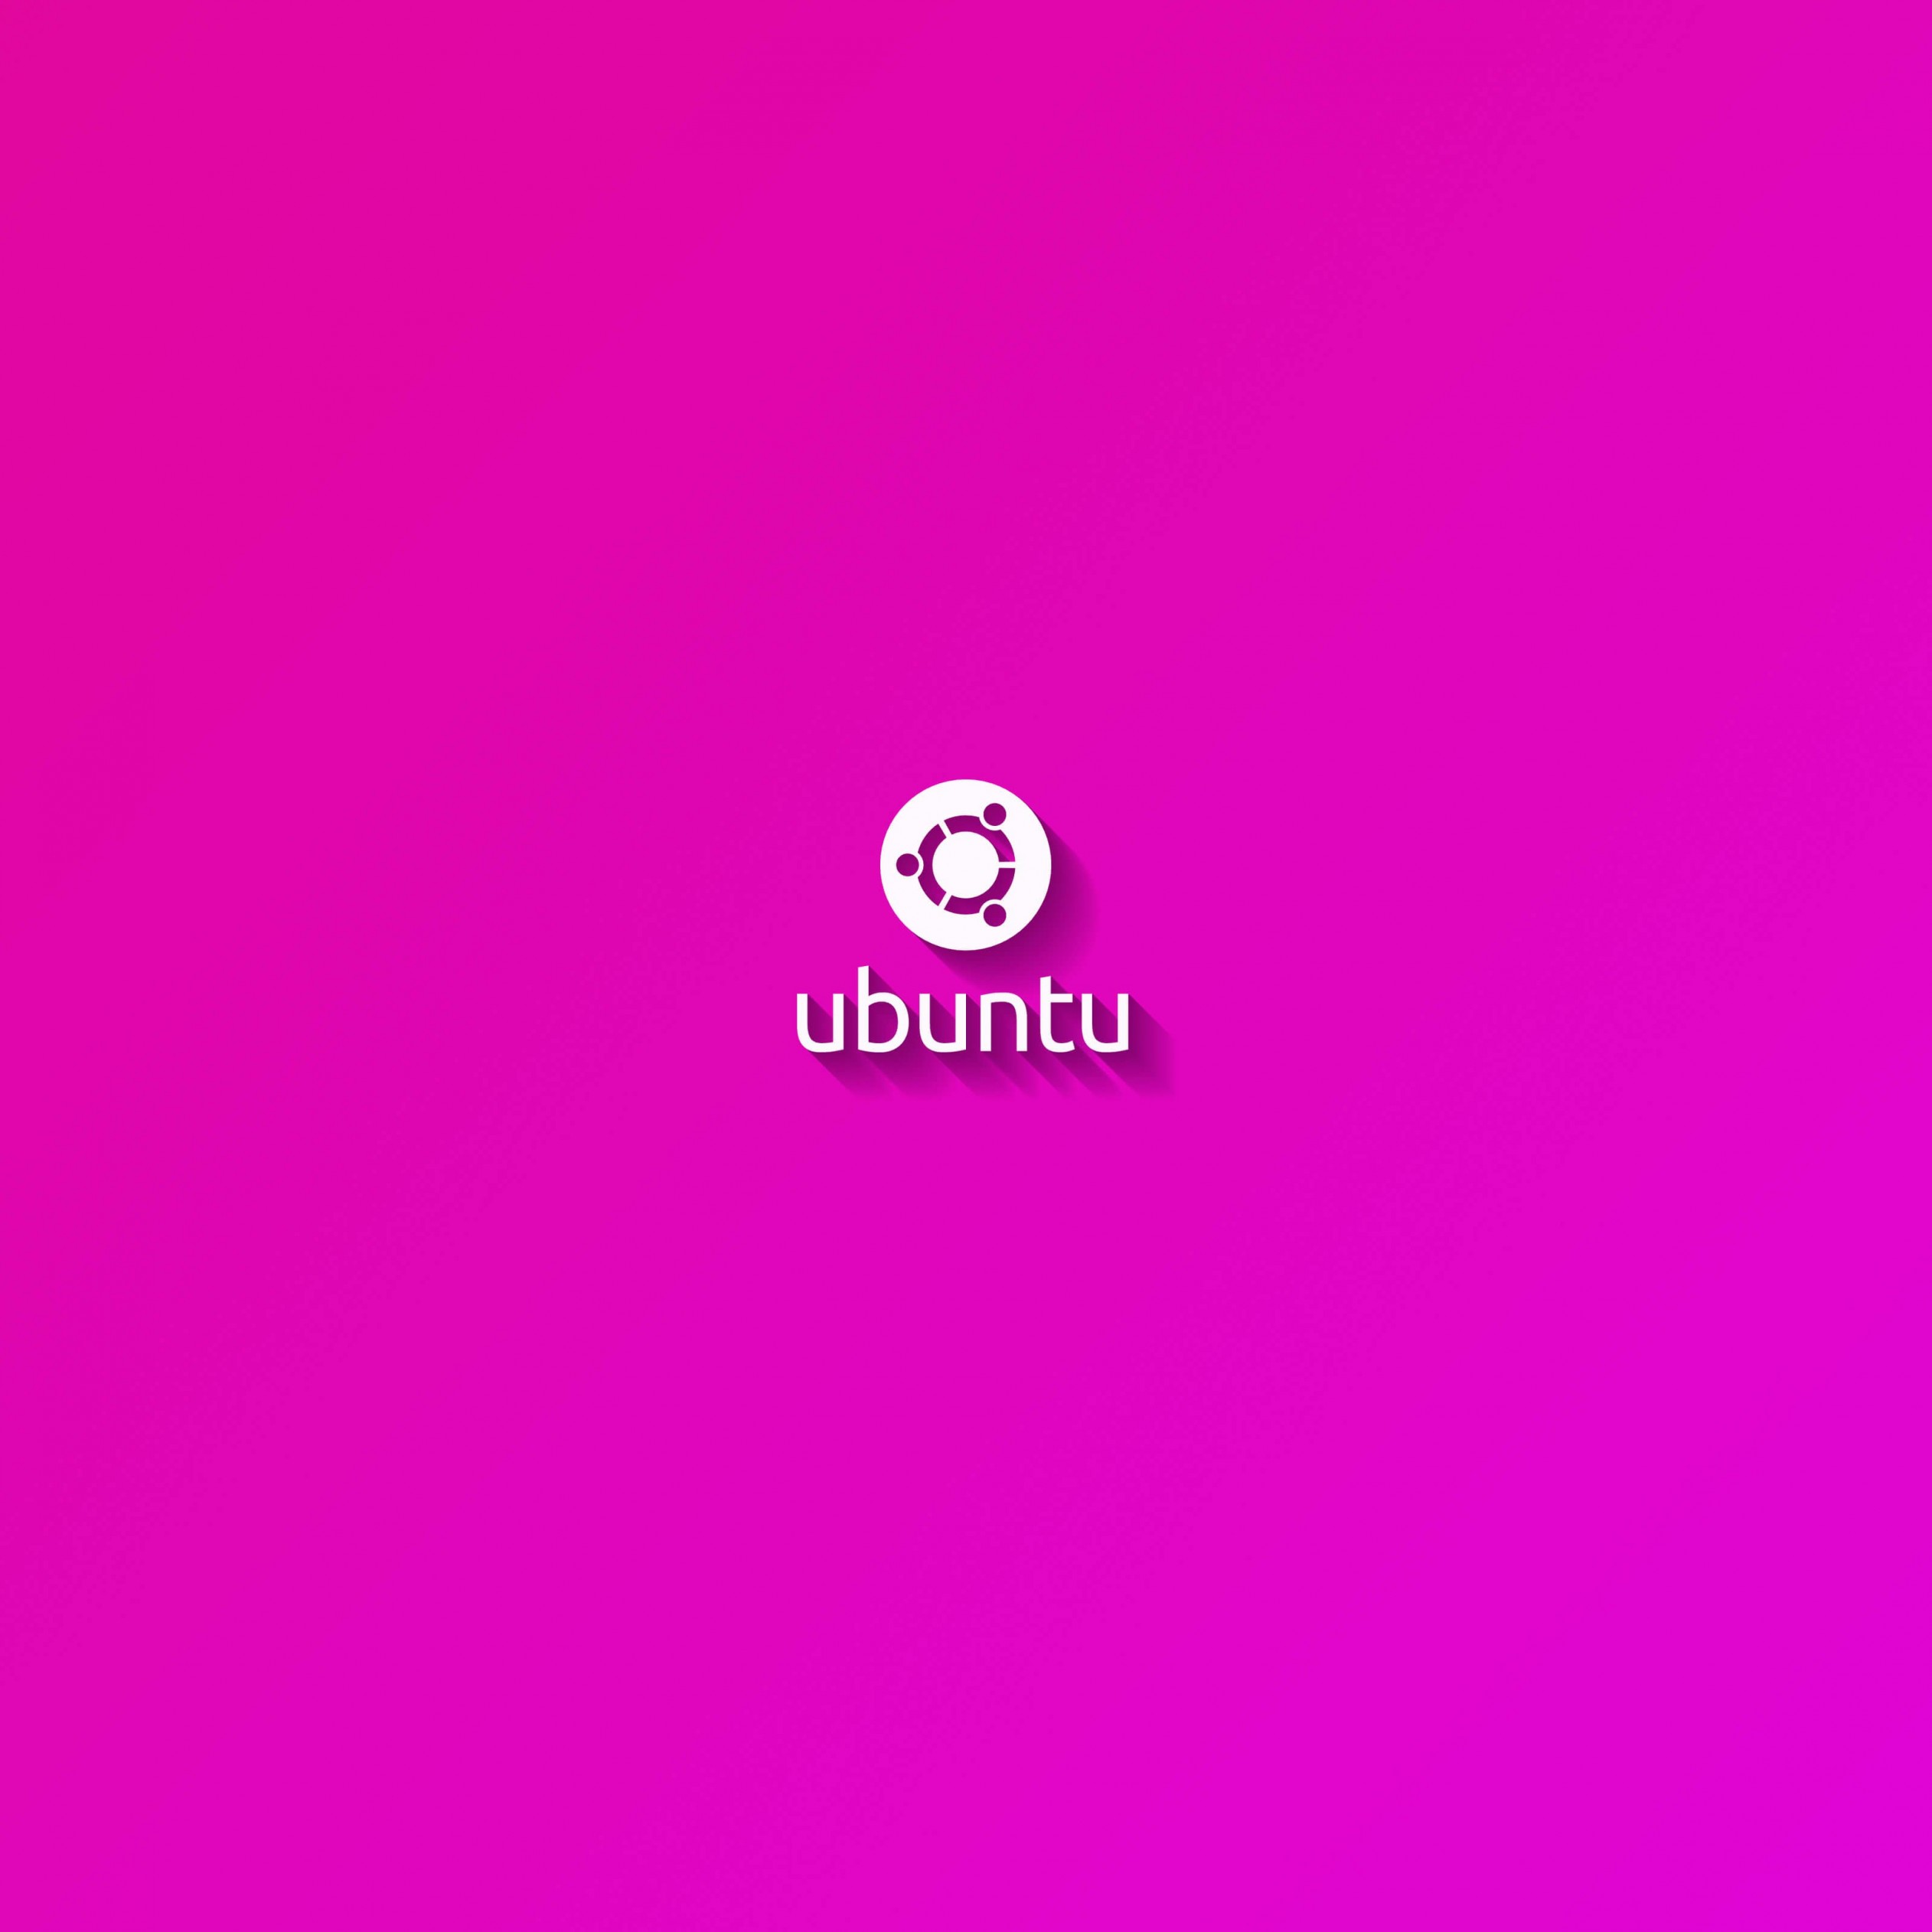 Ubuntu Flat Shadow Pink Wallpaper for Apple iPad mini 2